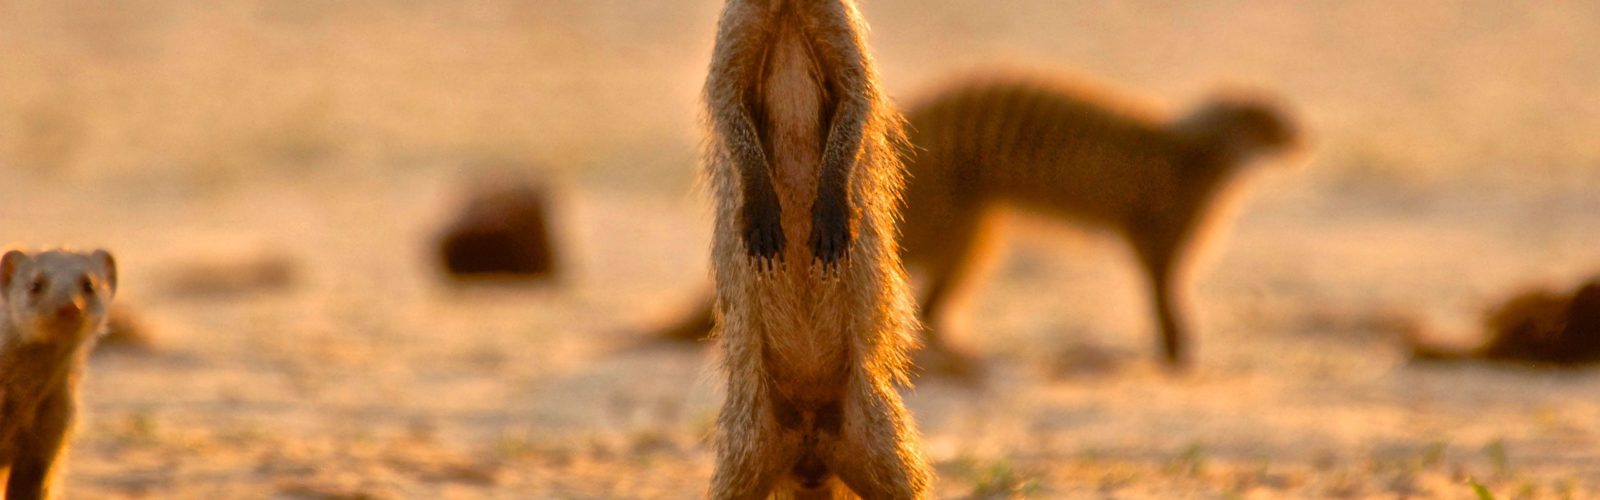 Banded-mongoose-on-patrol Zimbabwe